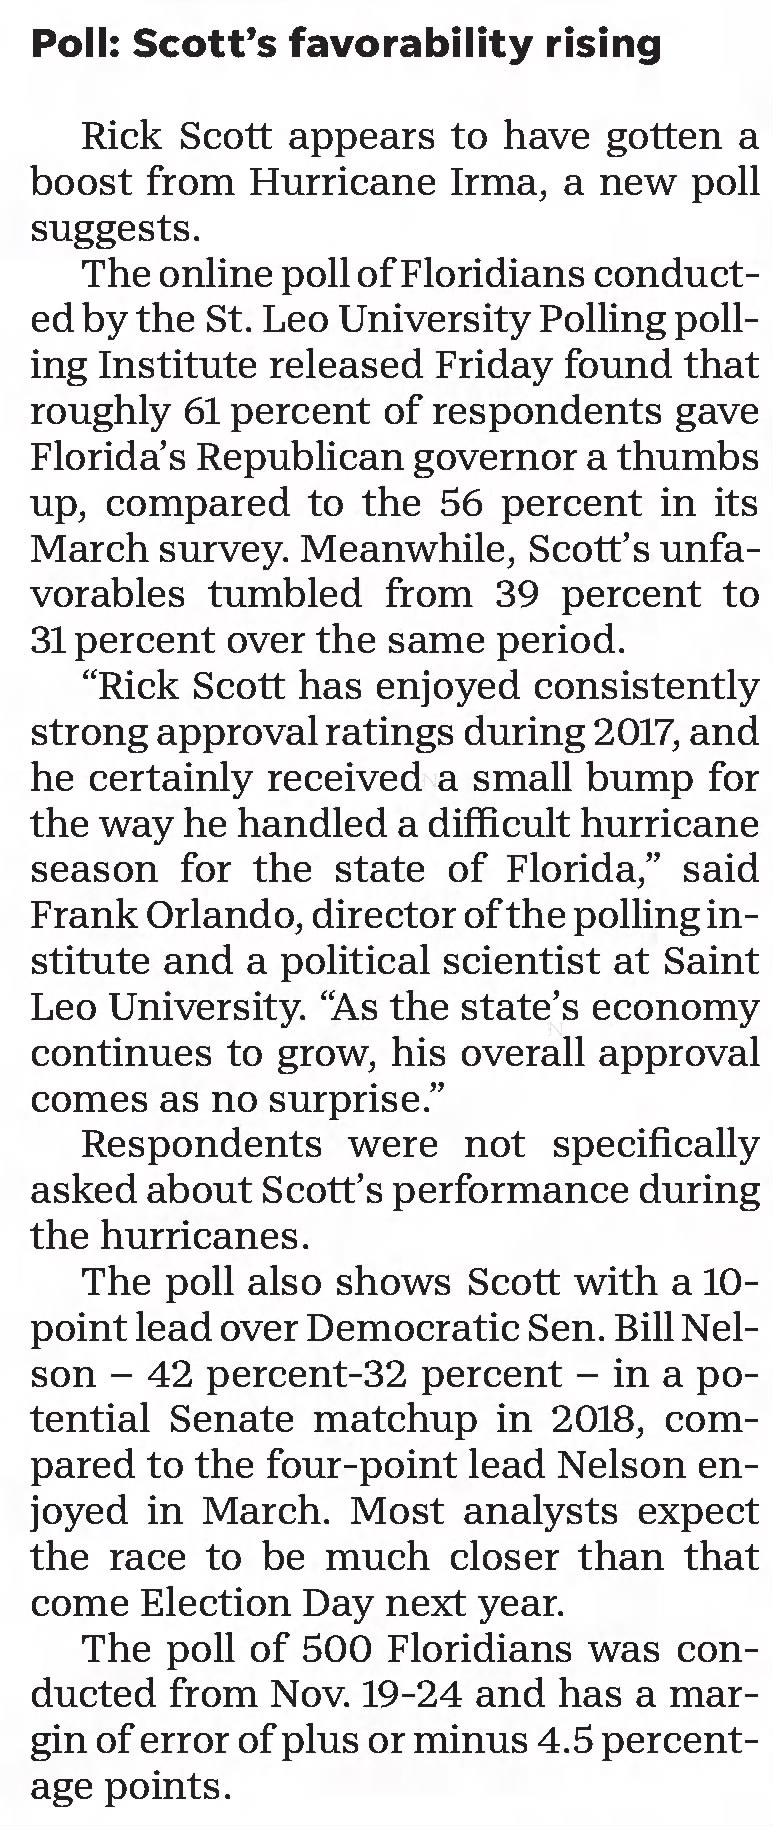 Poll: Scott's favorability rising